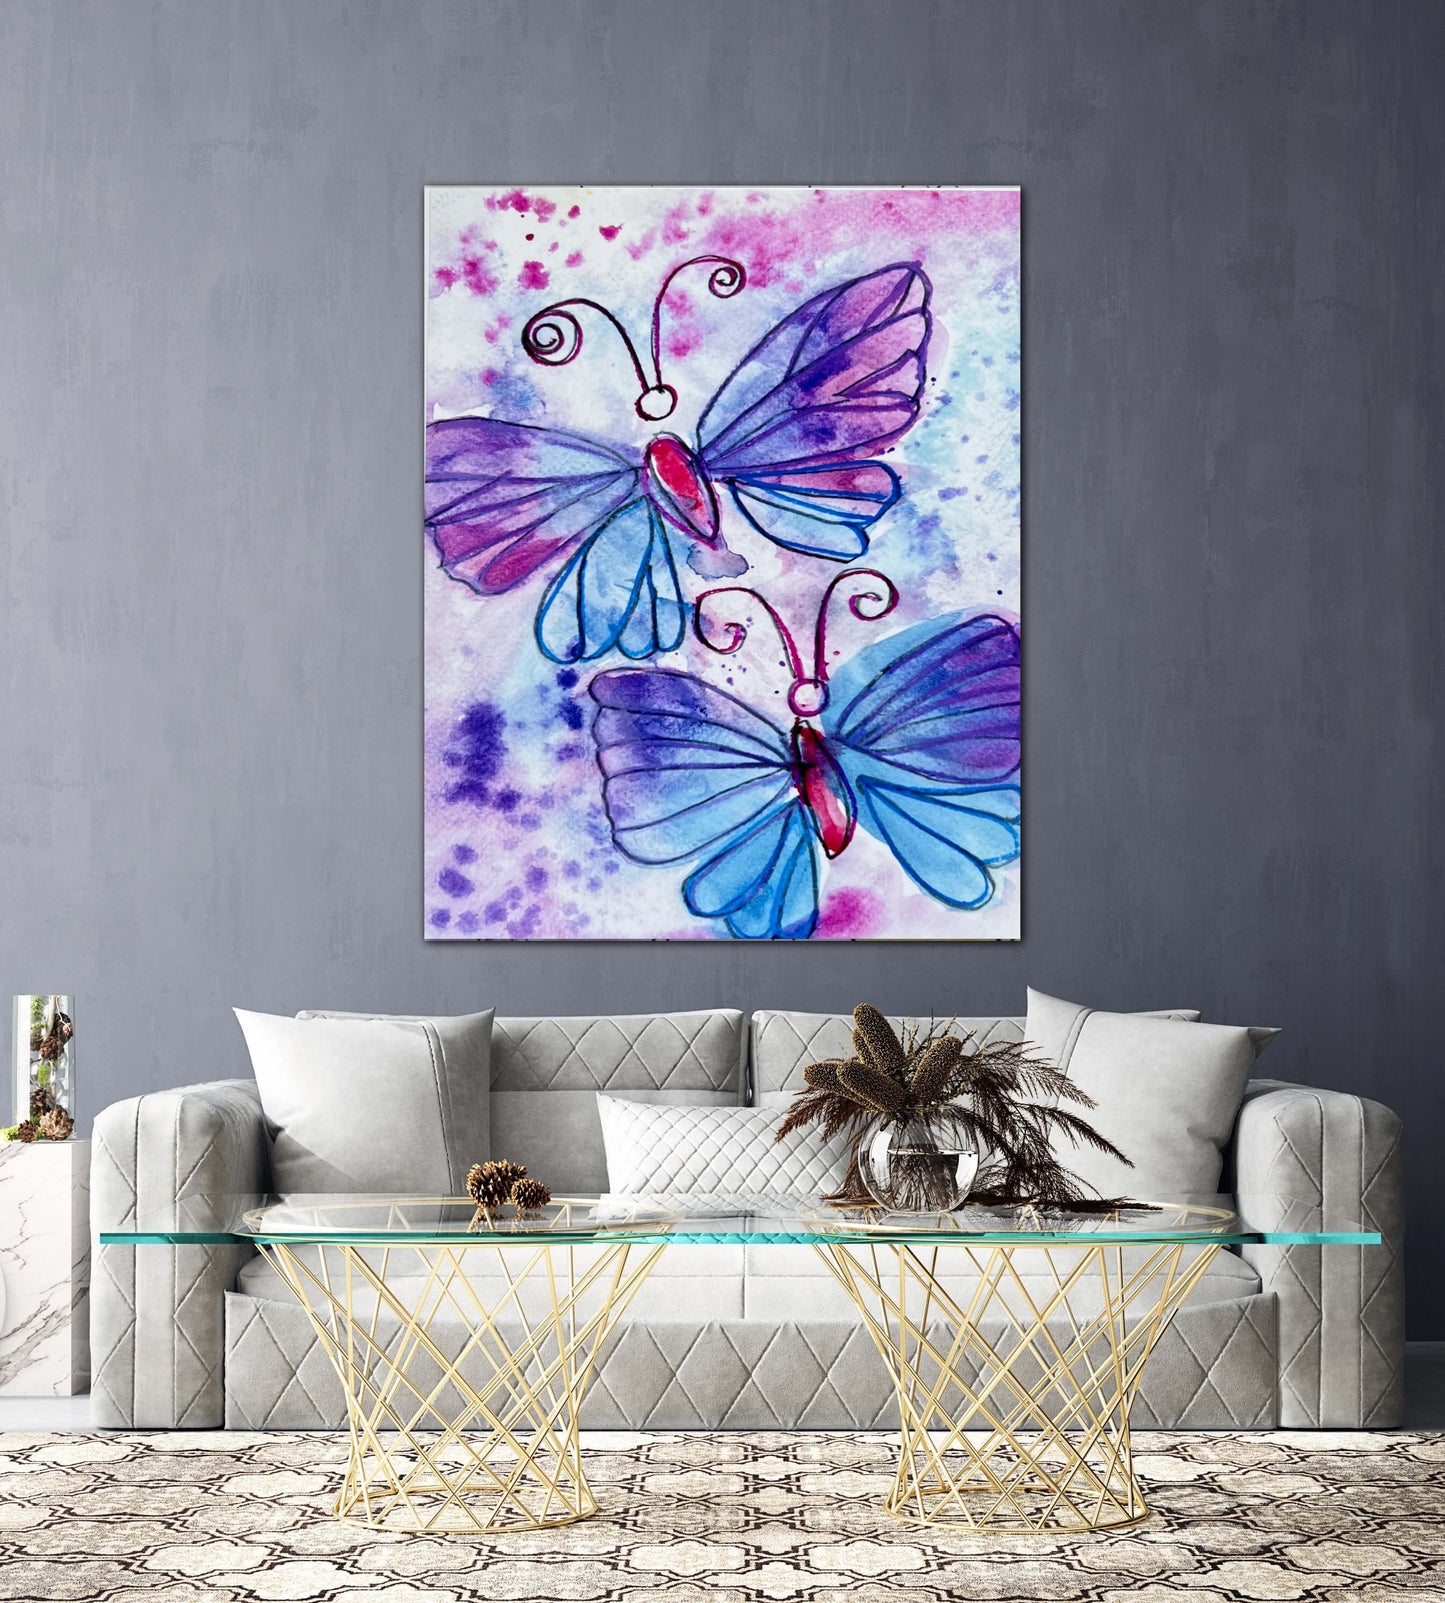 Two Purple Butterflies - fine prints of original artwork